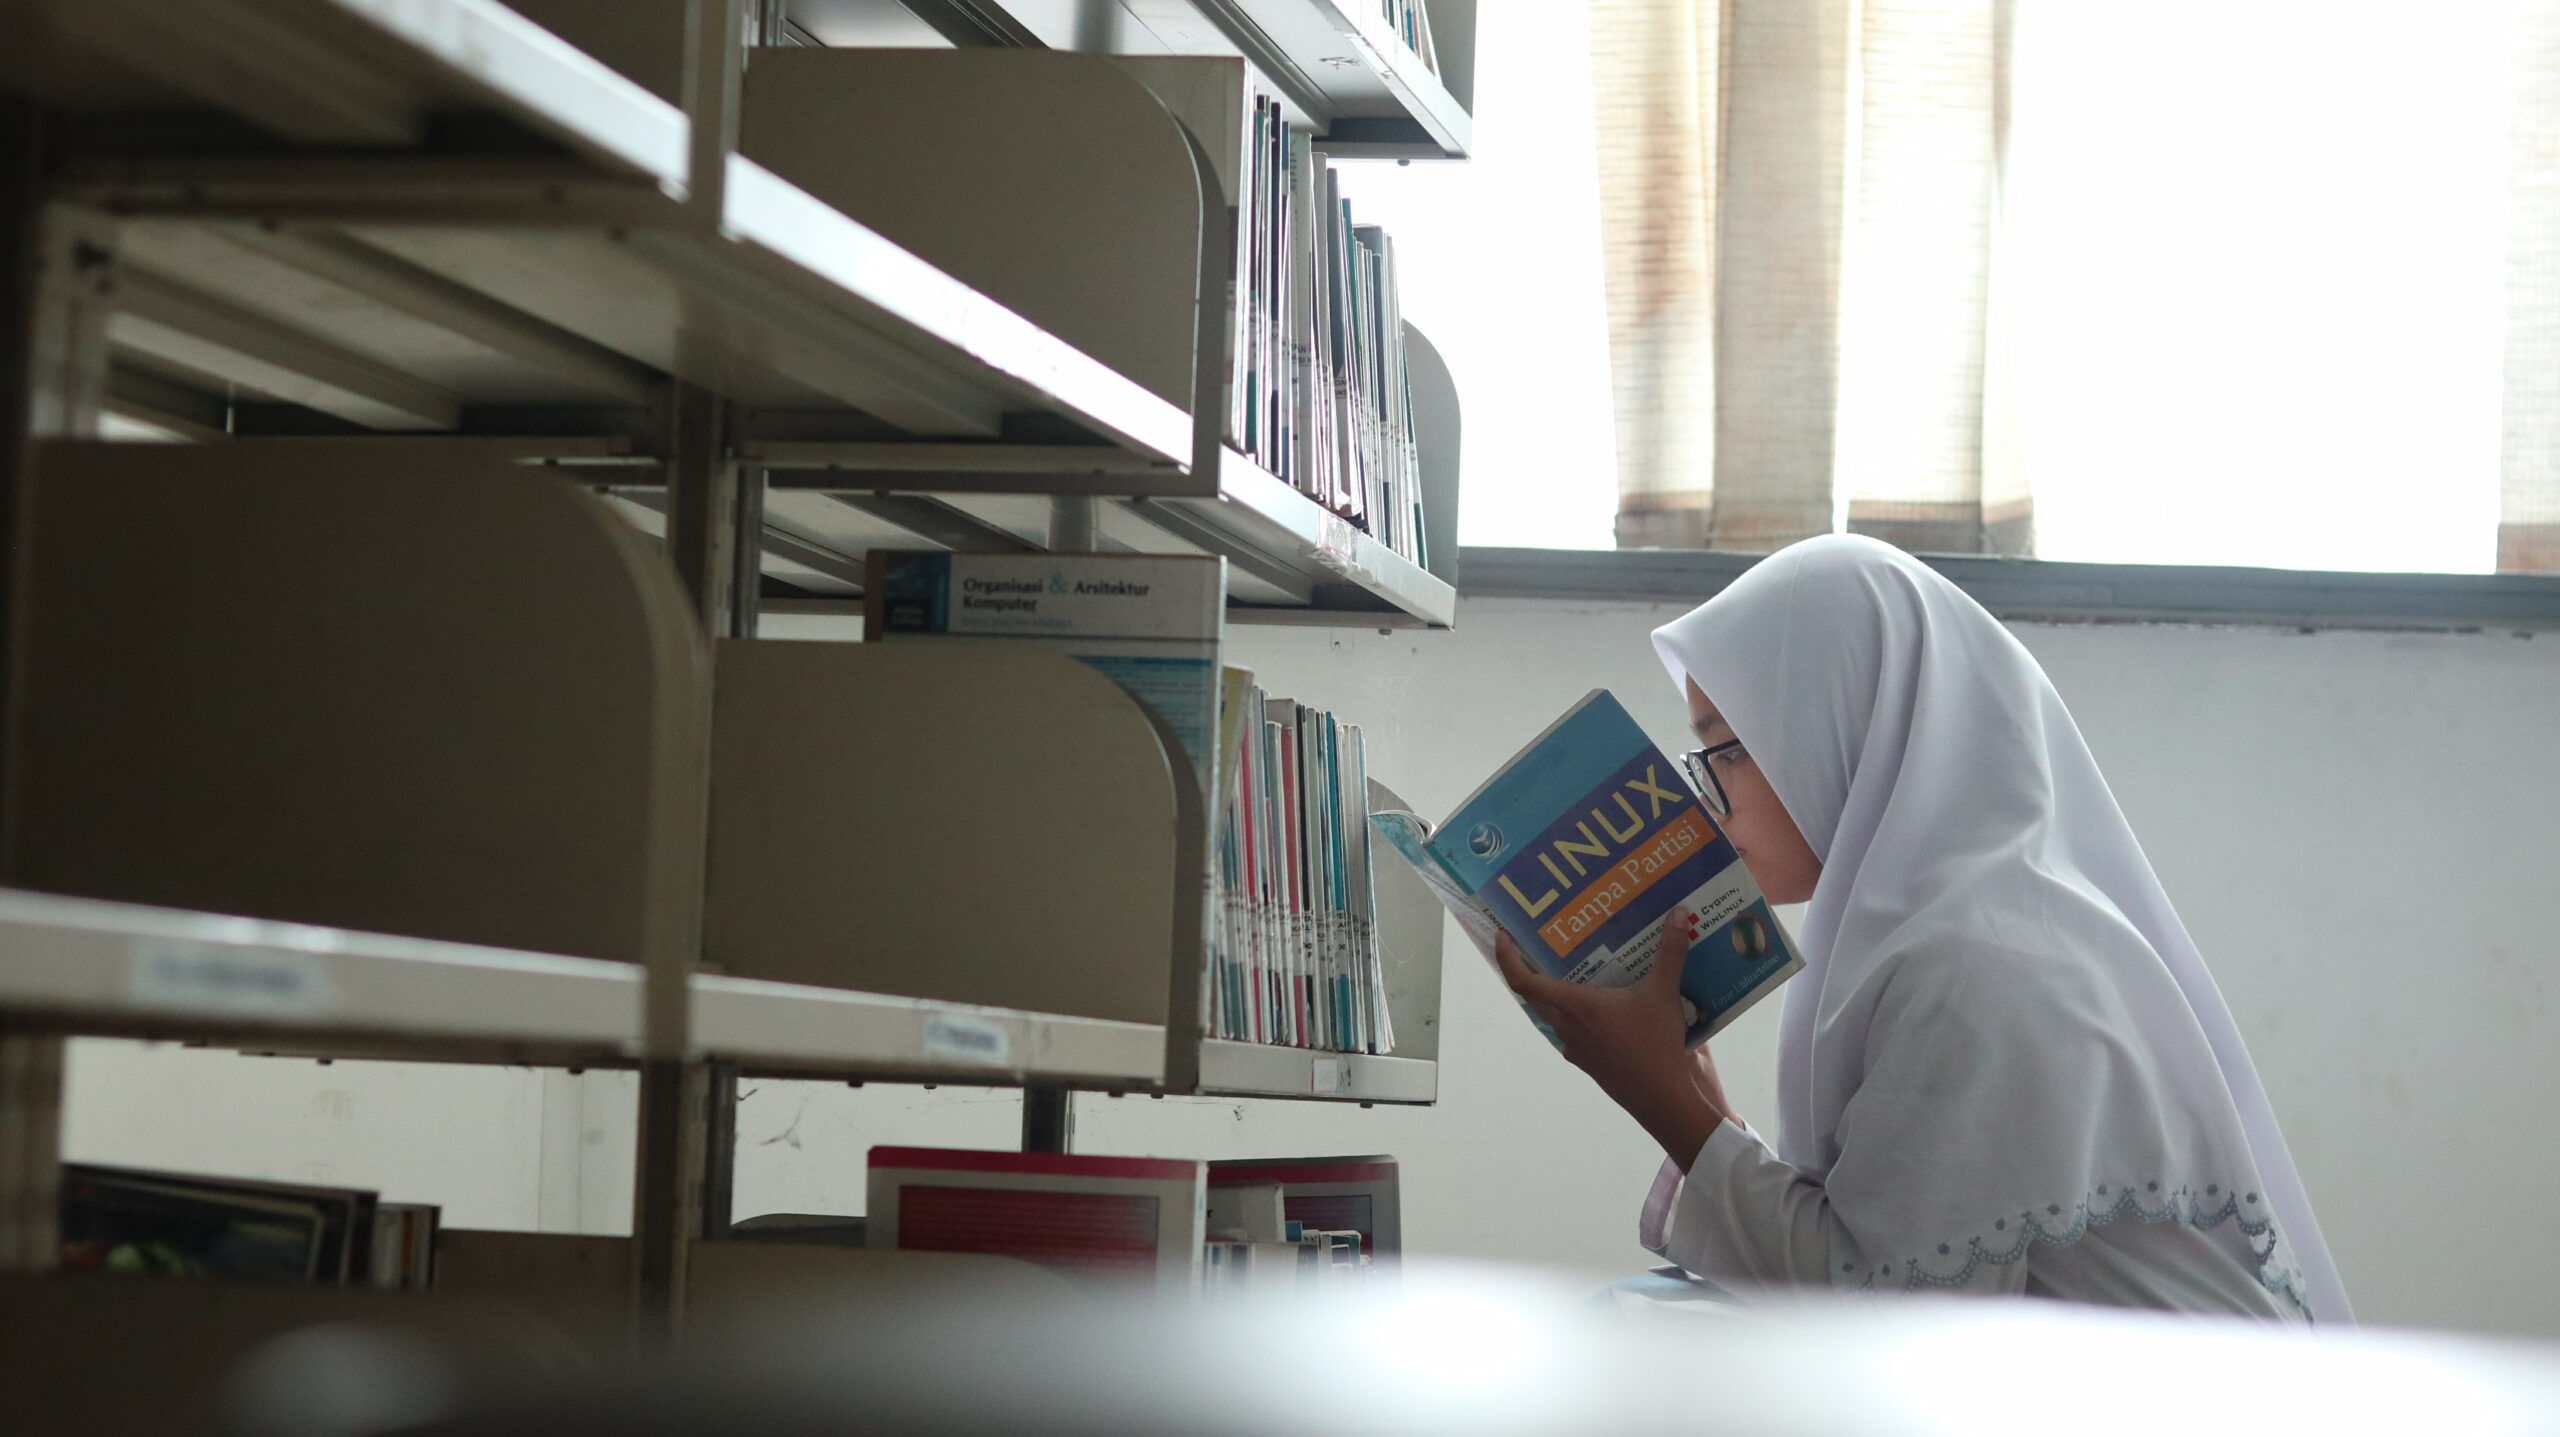 Membangun Budaya Literasi di SMA Istiqamah Muhammadiyah.